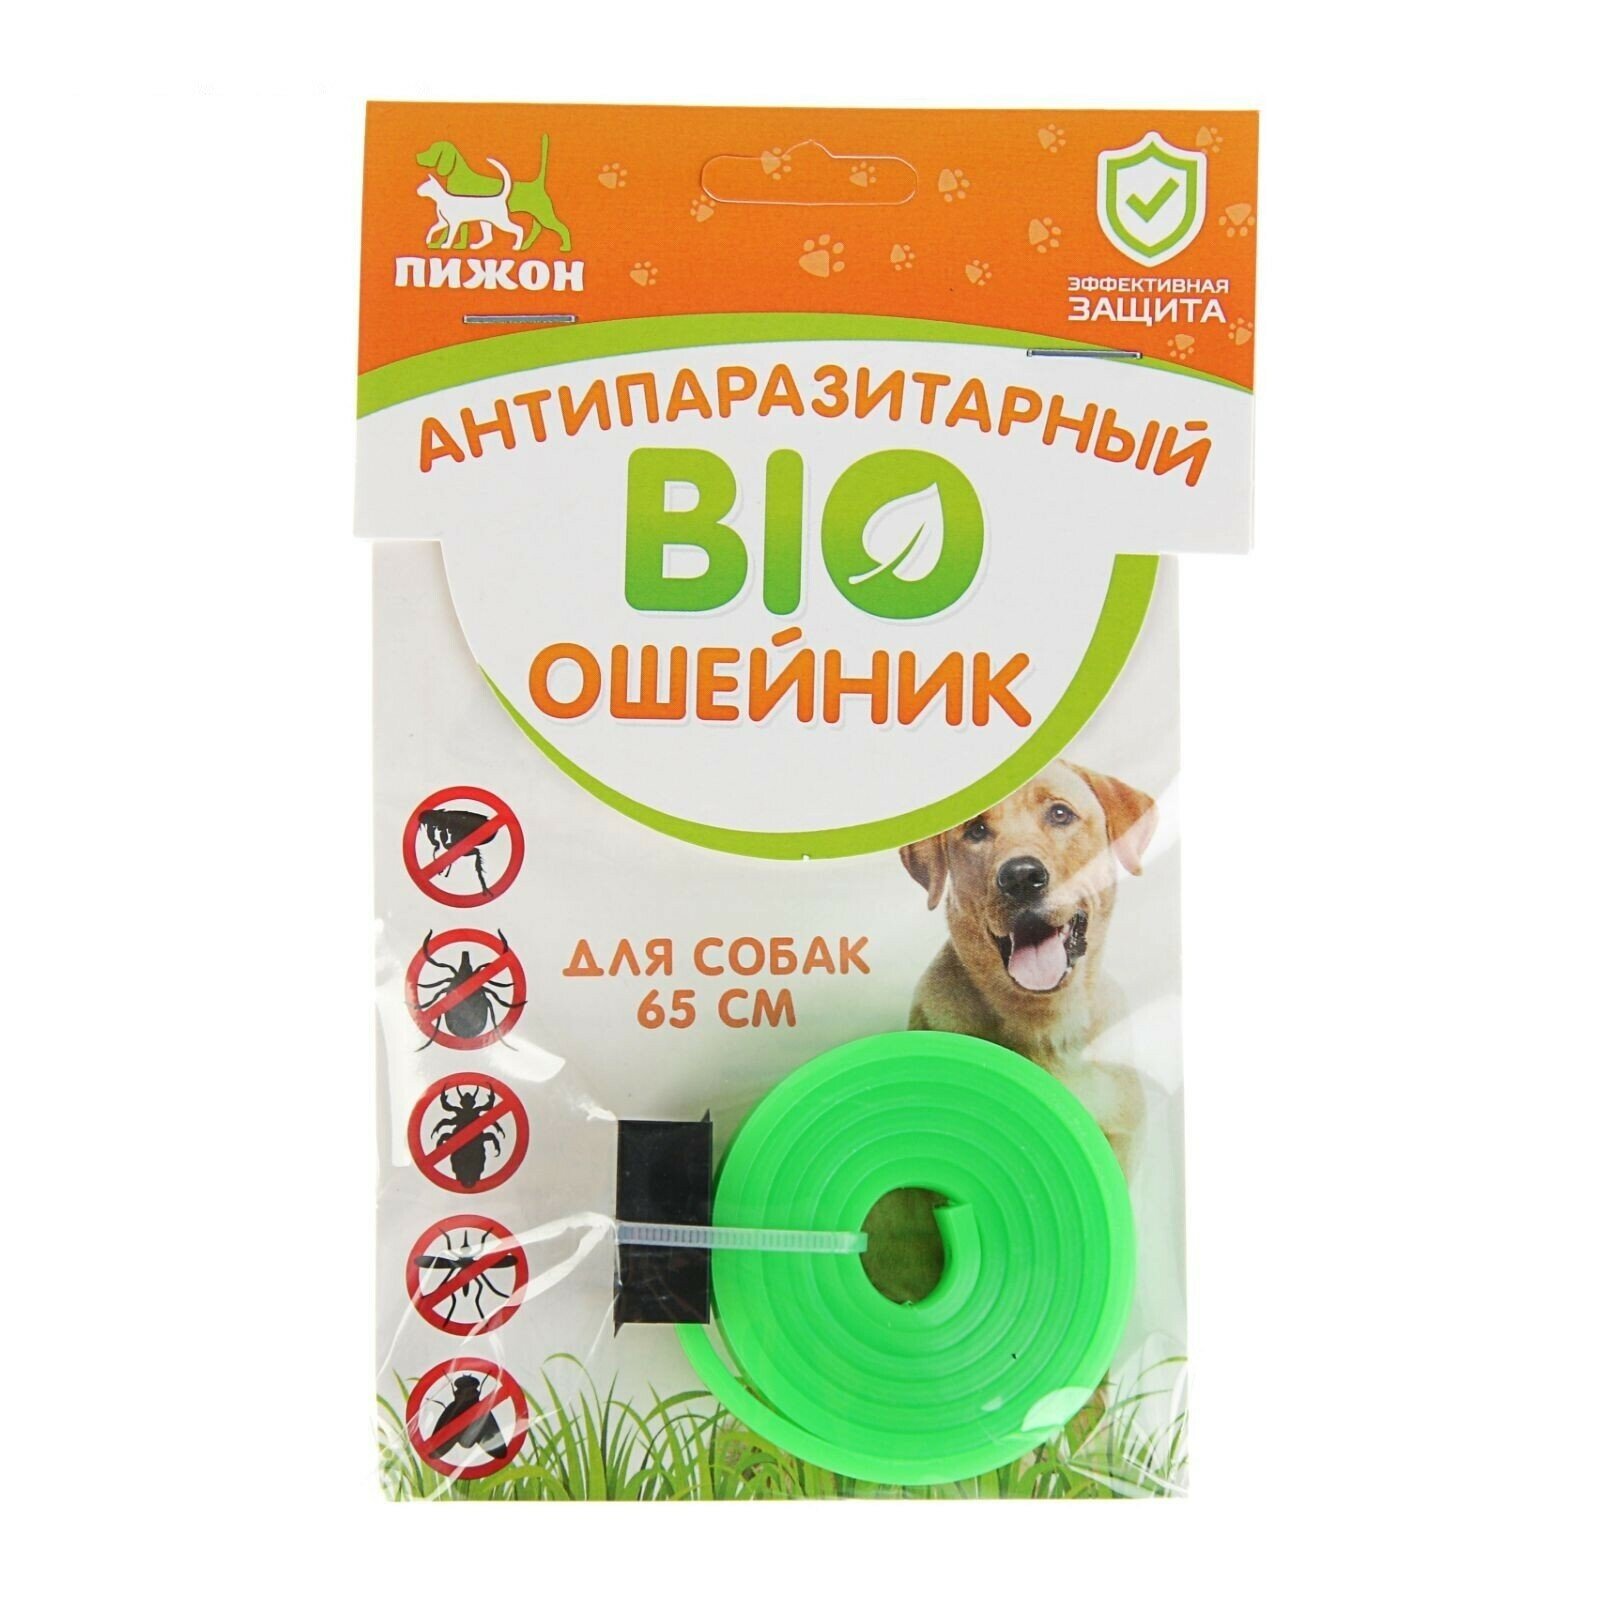 "Биоошейник антипаразитарный симамарт Для собак ""пижон"" зеленый"